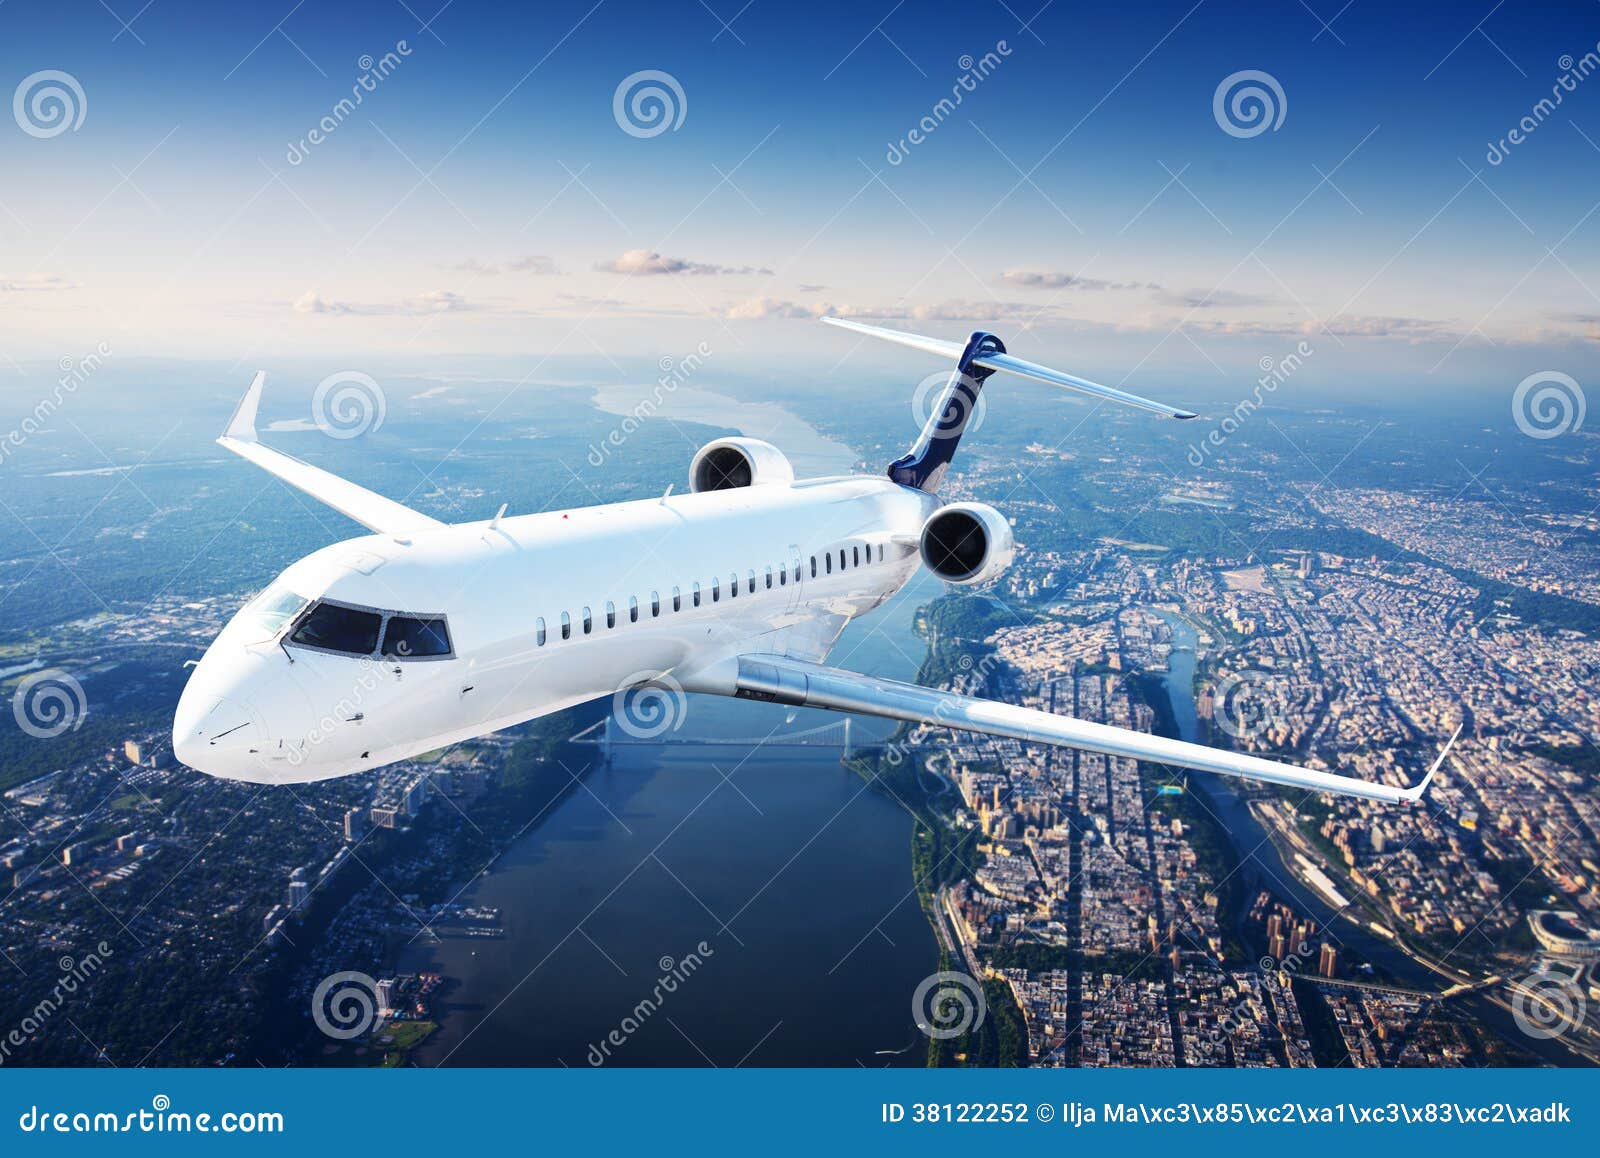 private jet plane in the blue sky